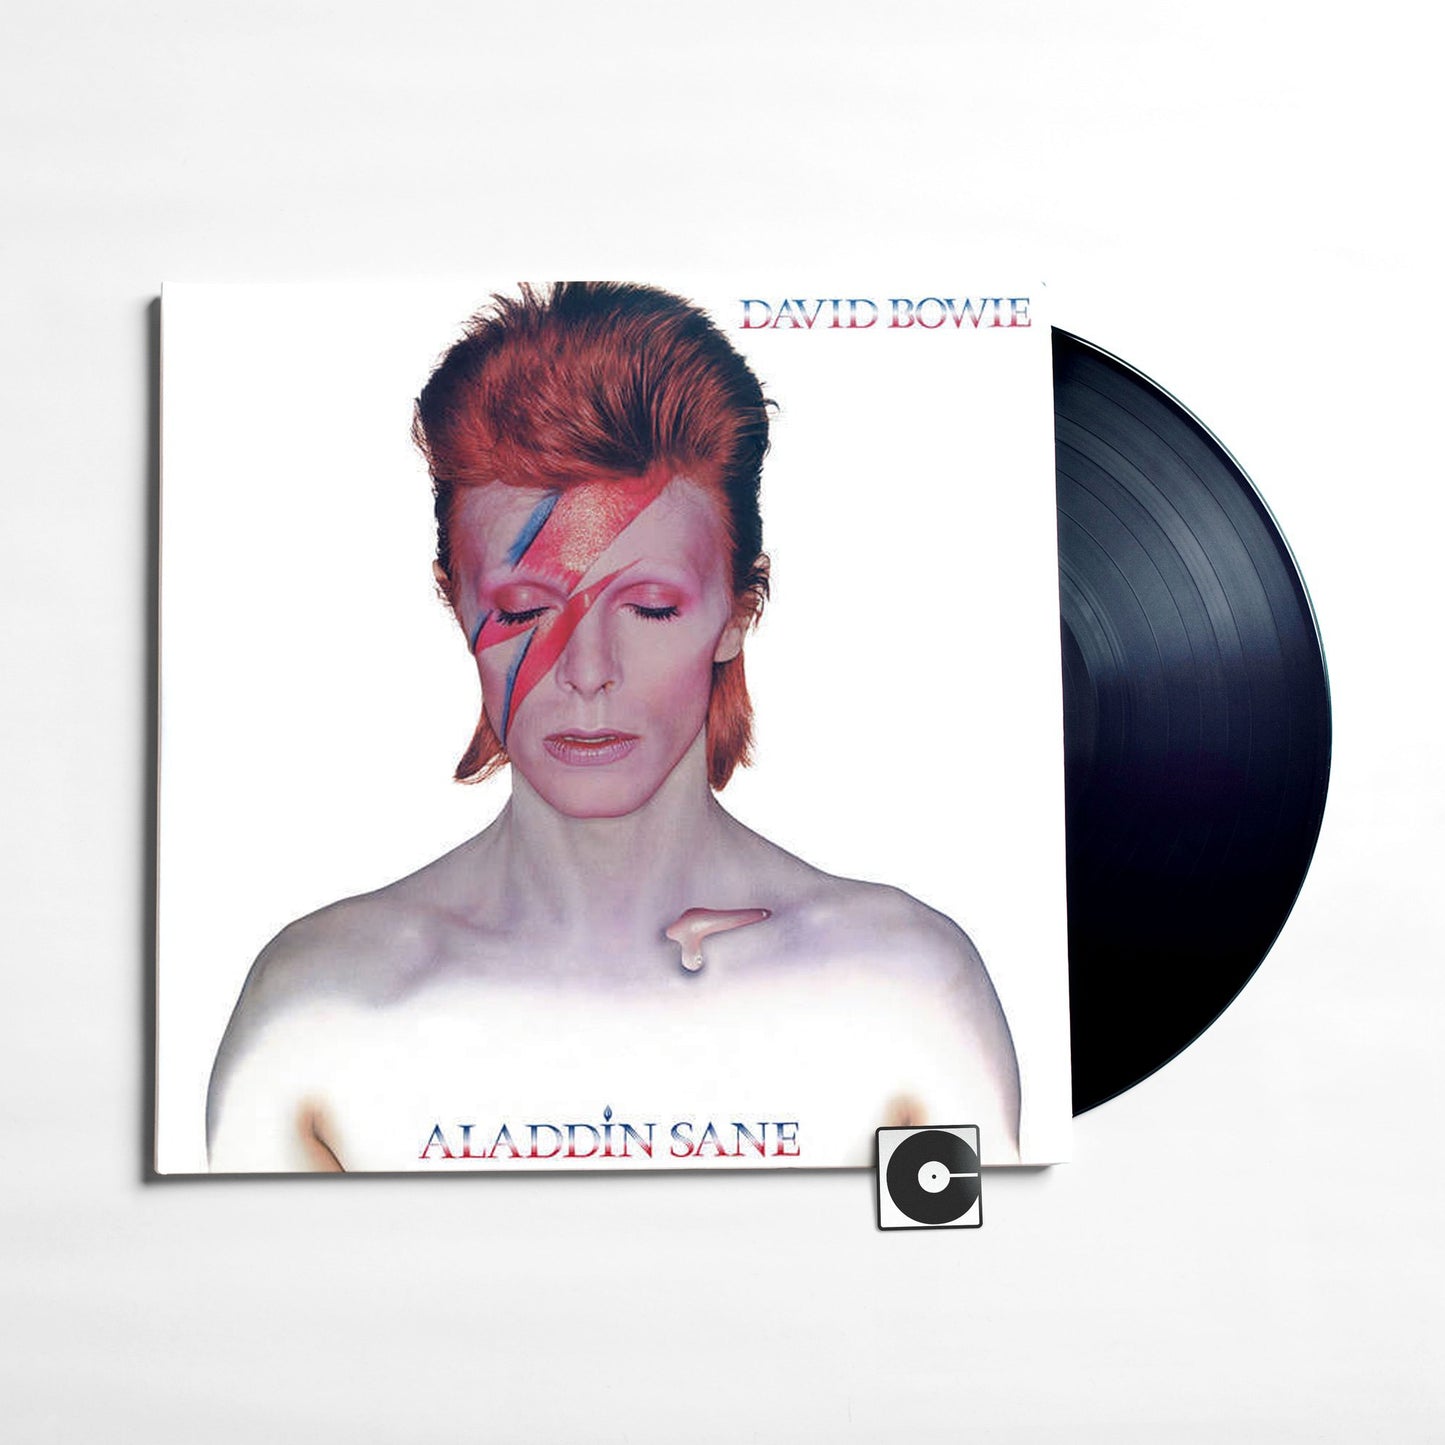 David Bowie - "Aladdin Sane"